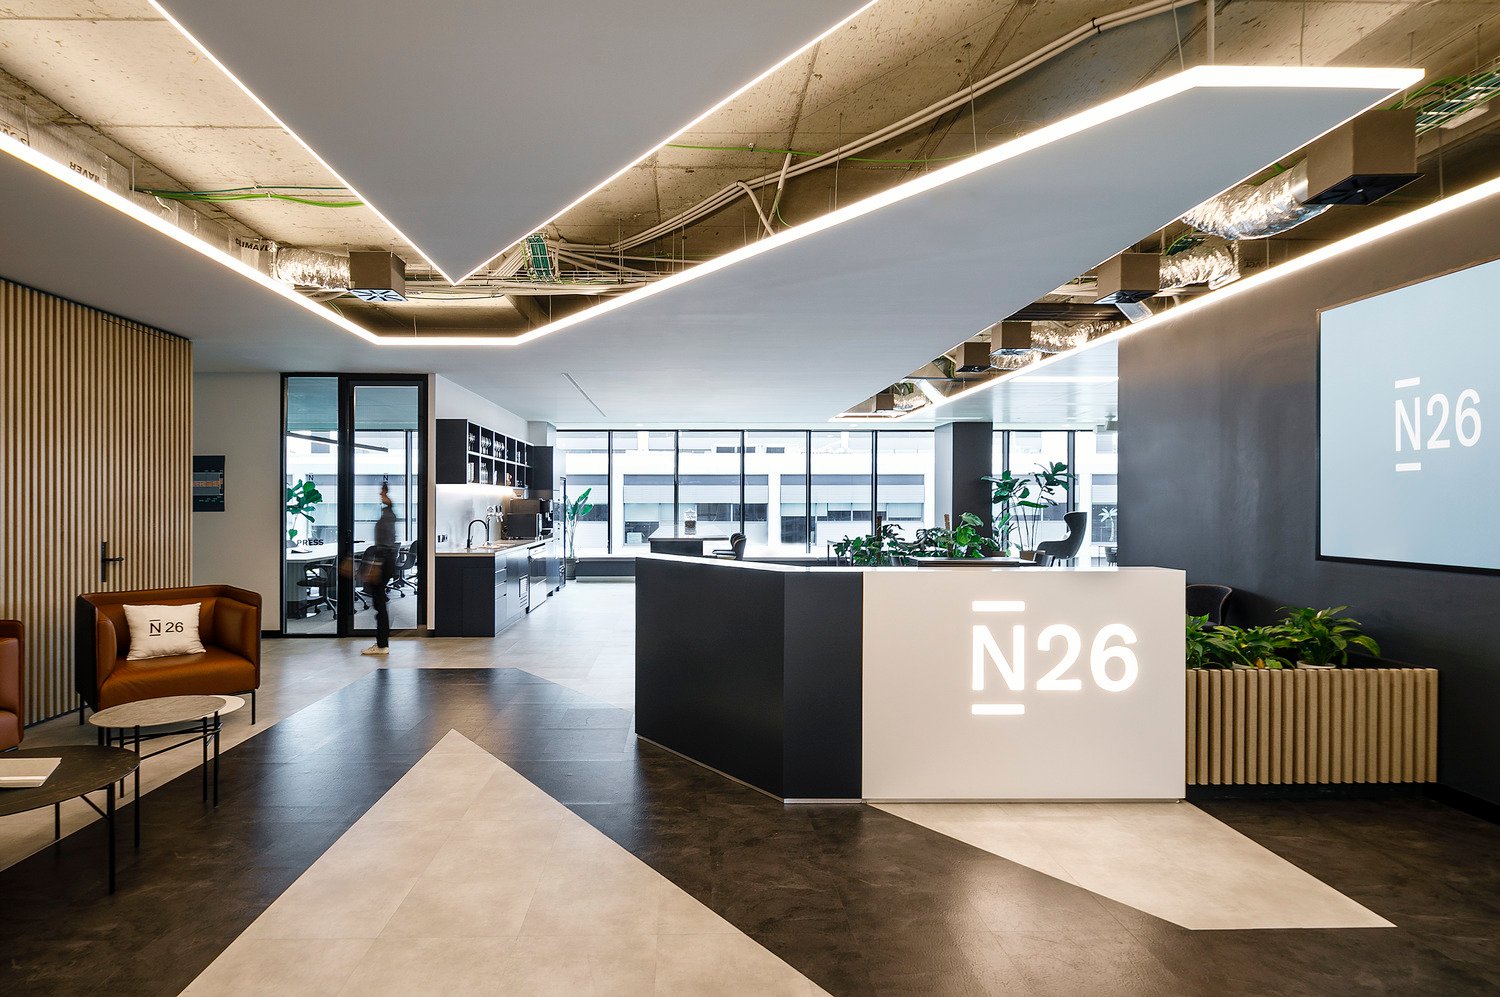 N26, Barcelona's new workplace by Unispace